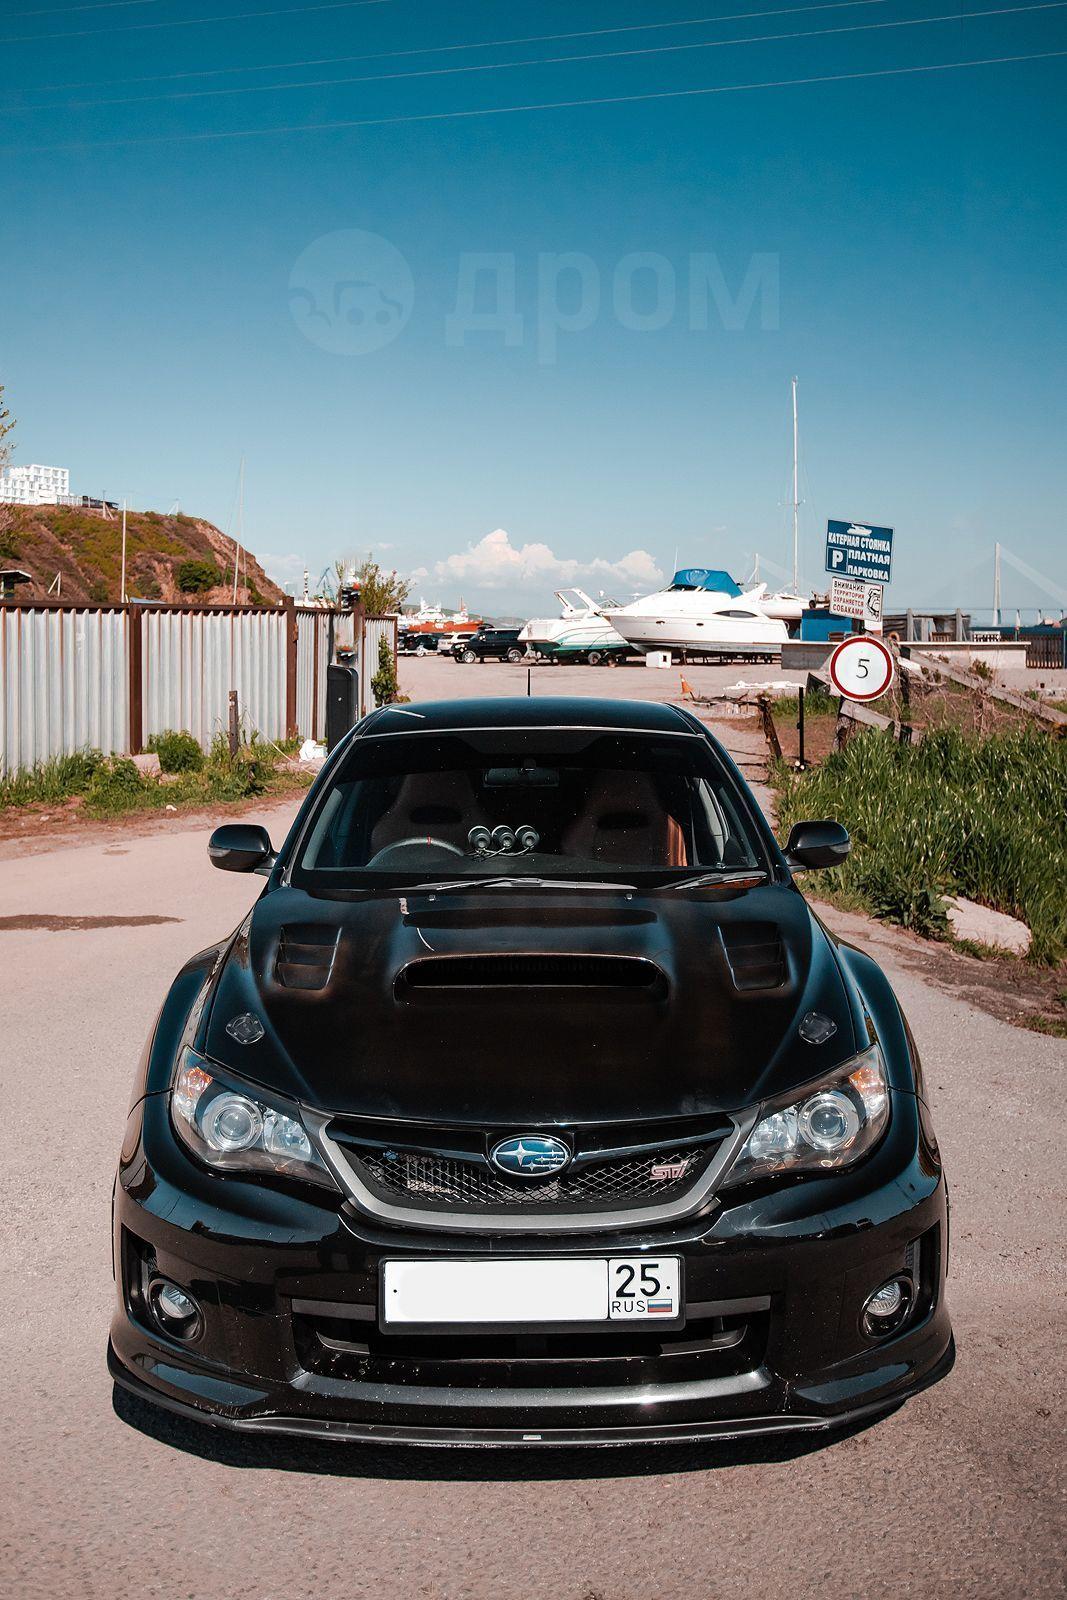 Subaru Impreza Wrx Sti Vo Vladivostoke Forsunki 1050ss Cena 1 3 Mln R Komplektaciya 2 5 Wrx Sti A Line Type S 4wd 4vd Sedan Benzin Probeg 110000 Km Avtomat